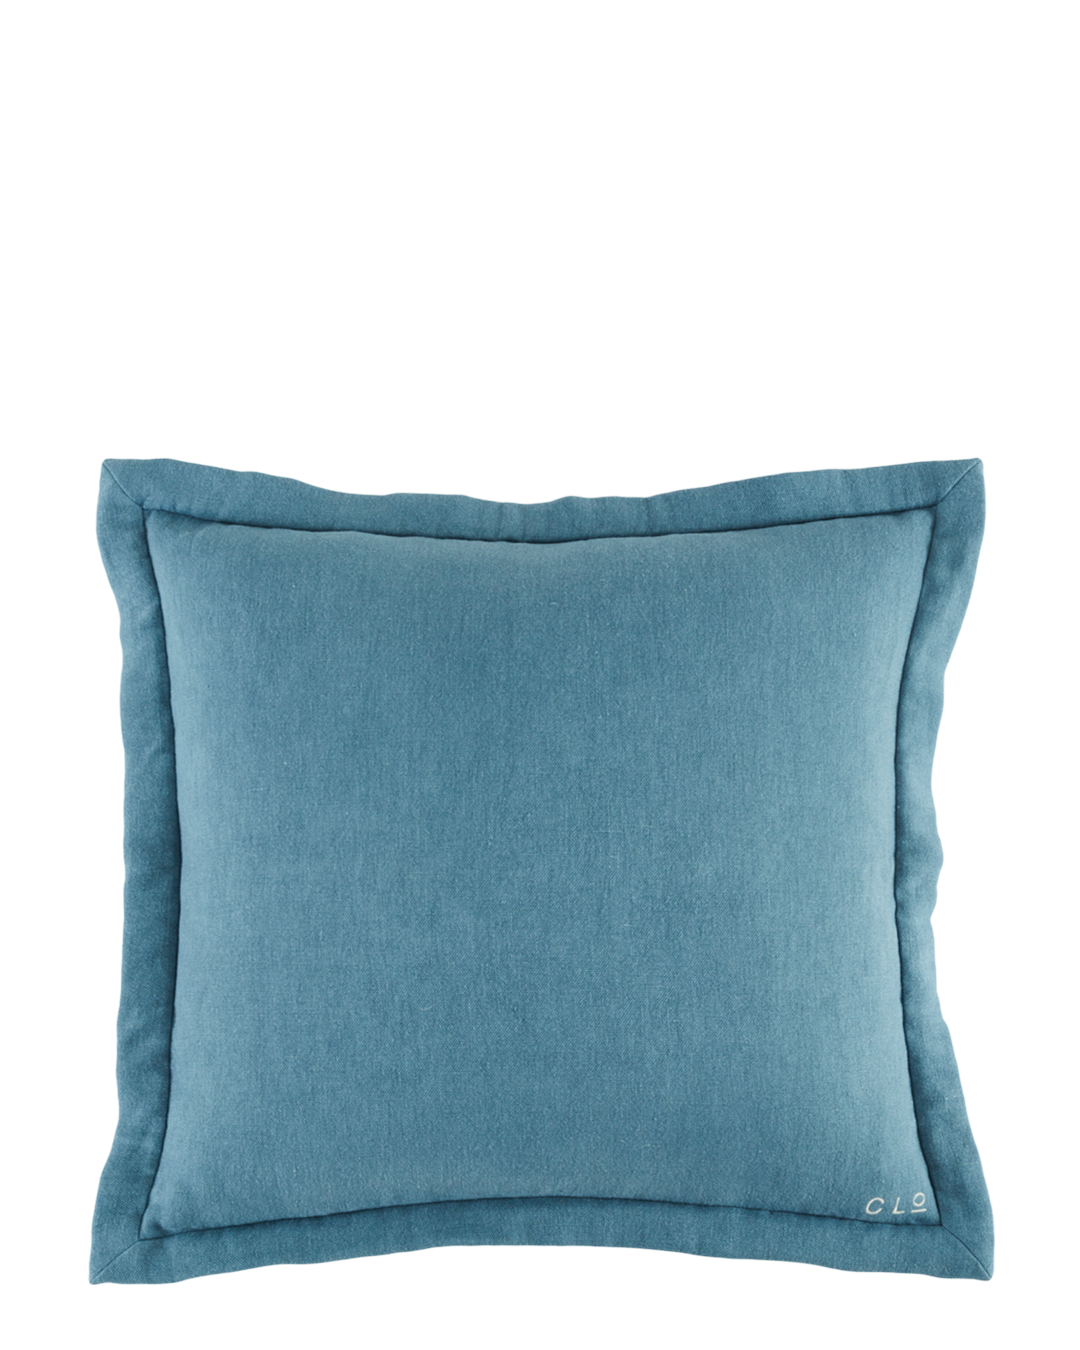 Soft Furnishings - Cushions, Table Linen & Towels – CLO Studios